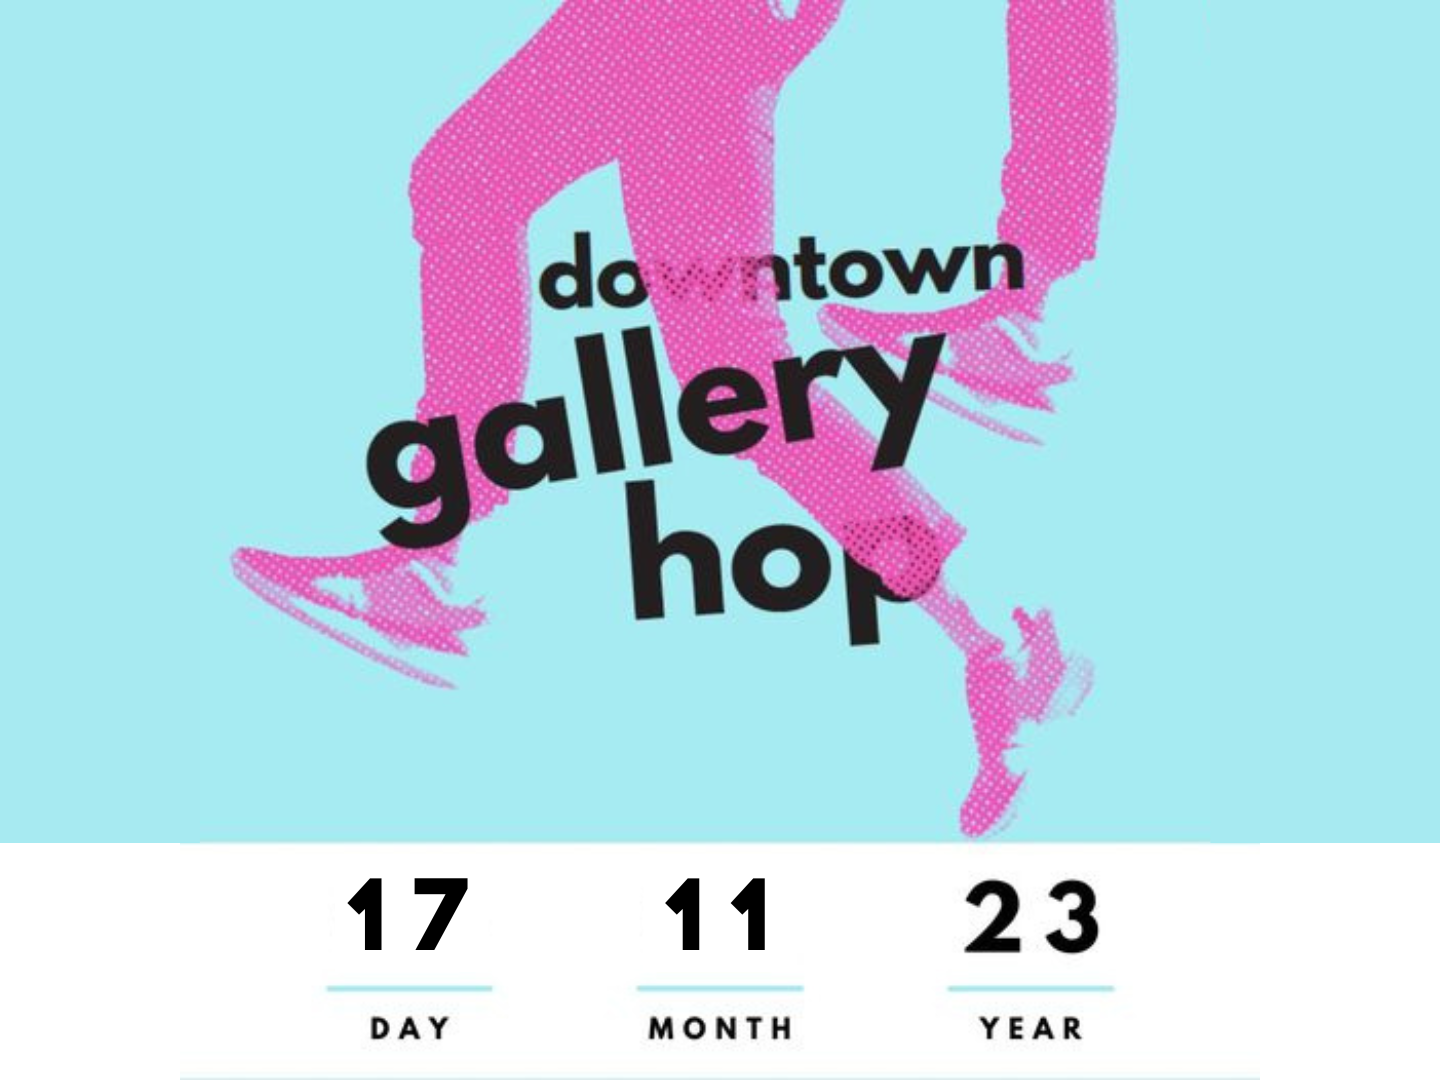 November Downtown Gallery Hop